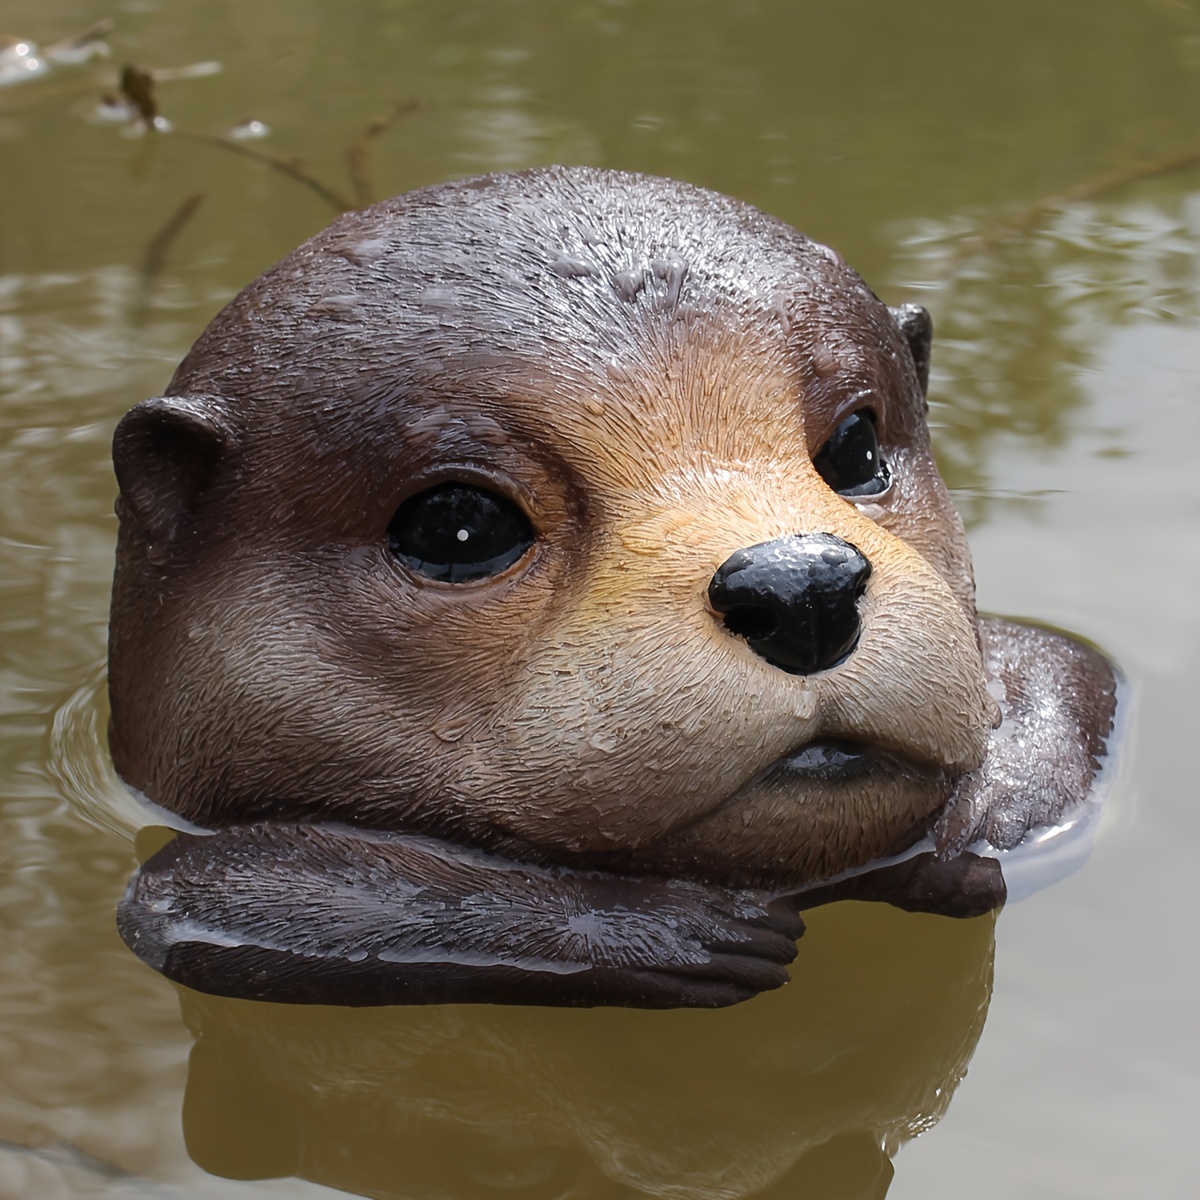 

1pc Floating Otter Head Resin Art, Waterproof Pond Float, Decorative Animal Sculpture (5.8"x6.1"x3.5"), Garden Lake Decor, Duck Deterrent, Artistic Resin Decor For Outdoor Use